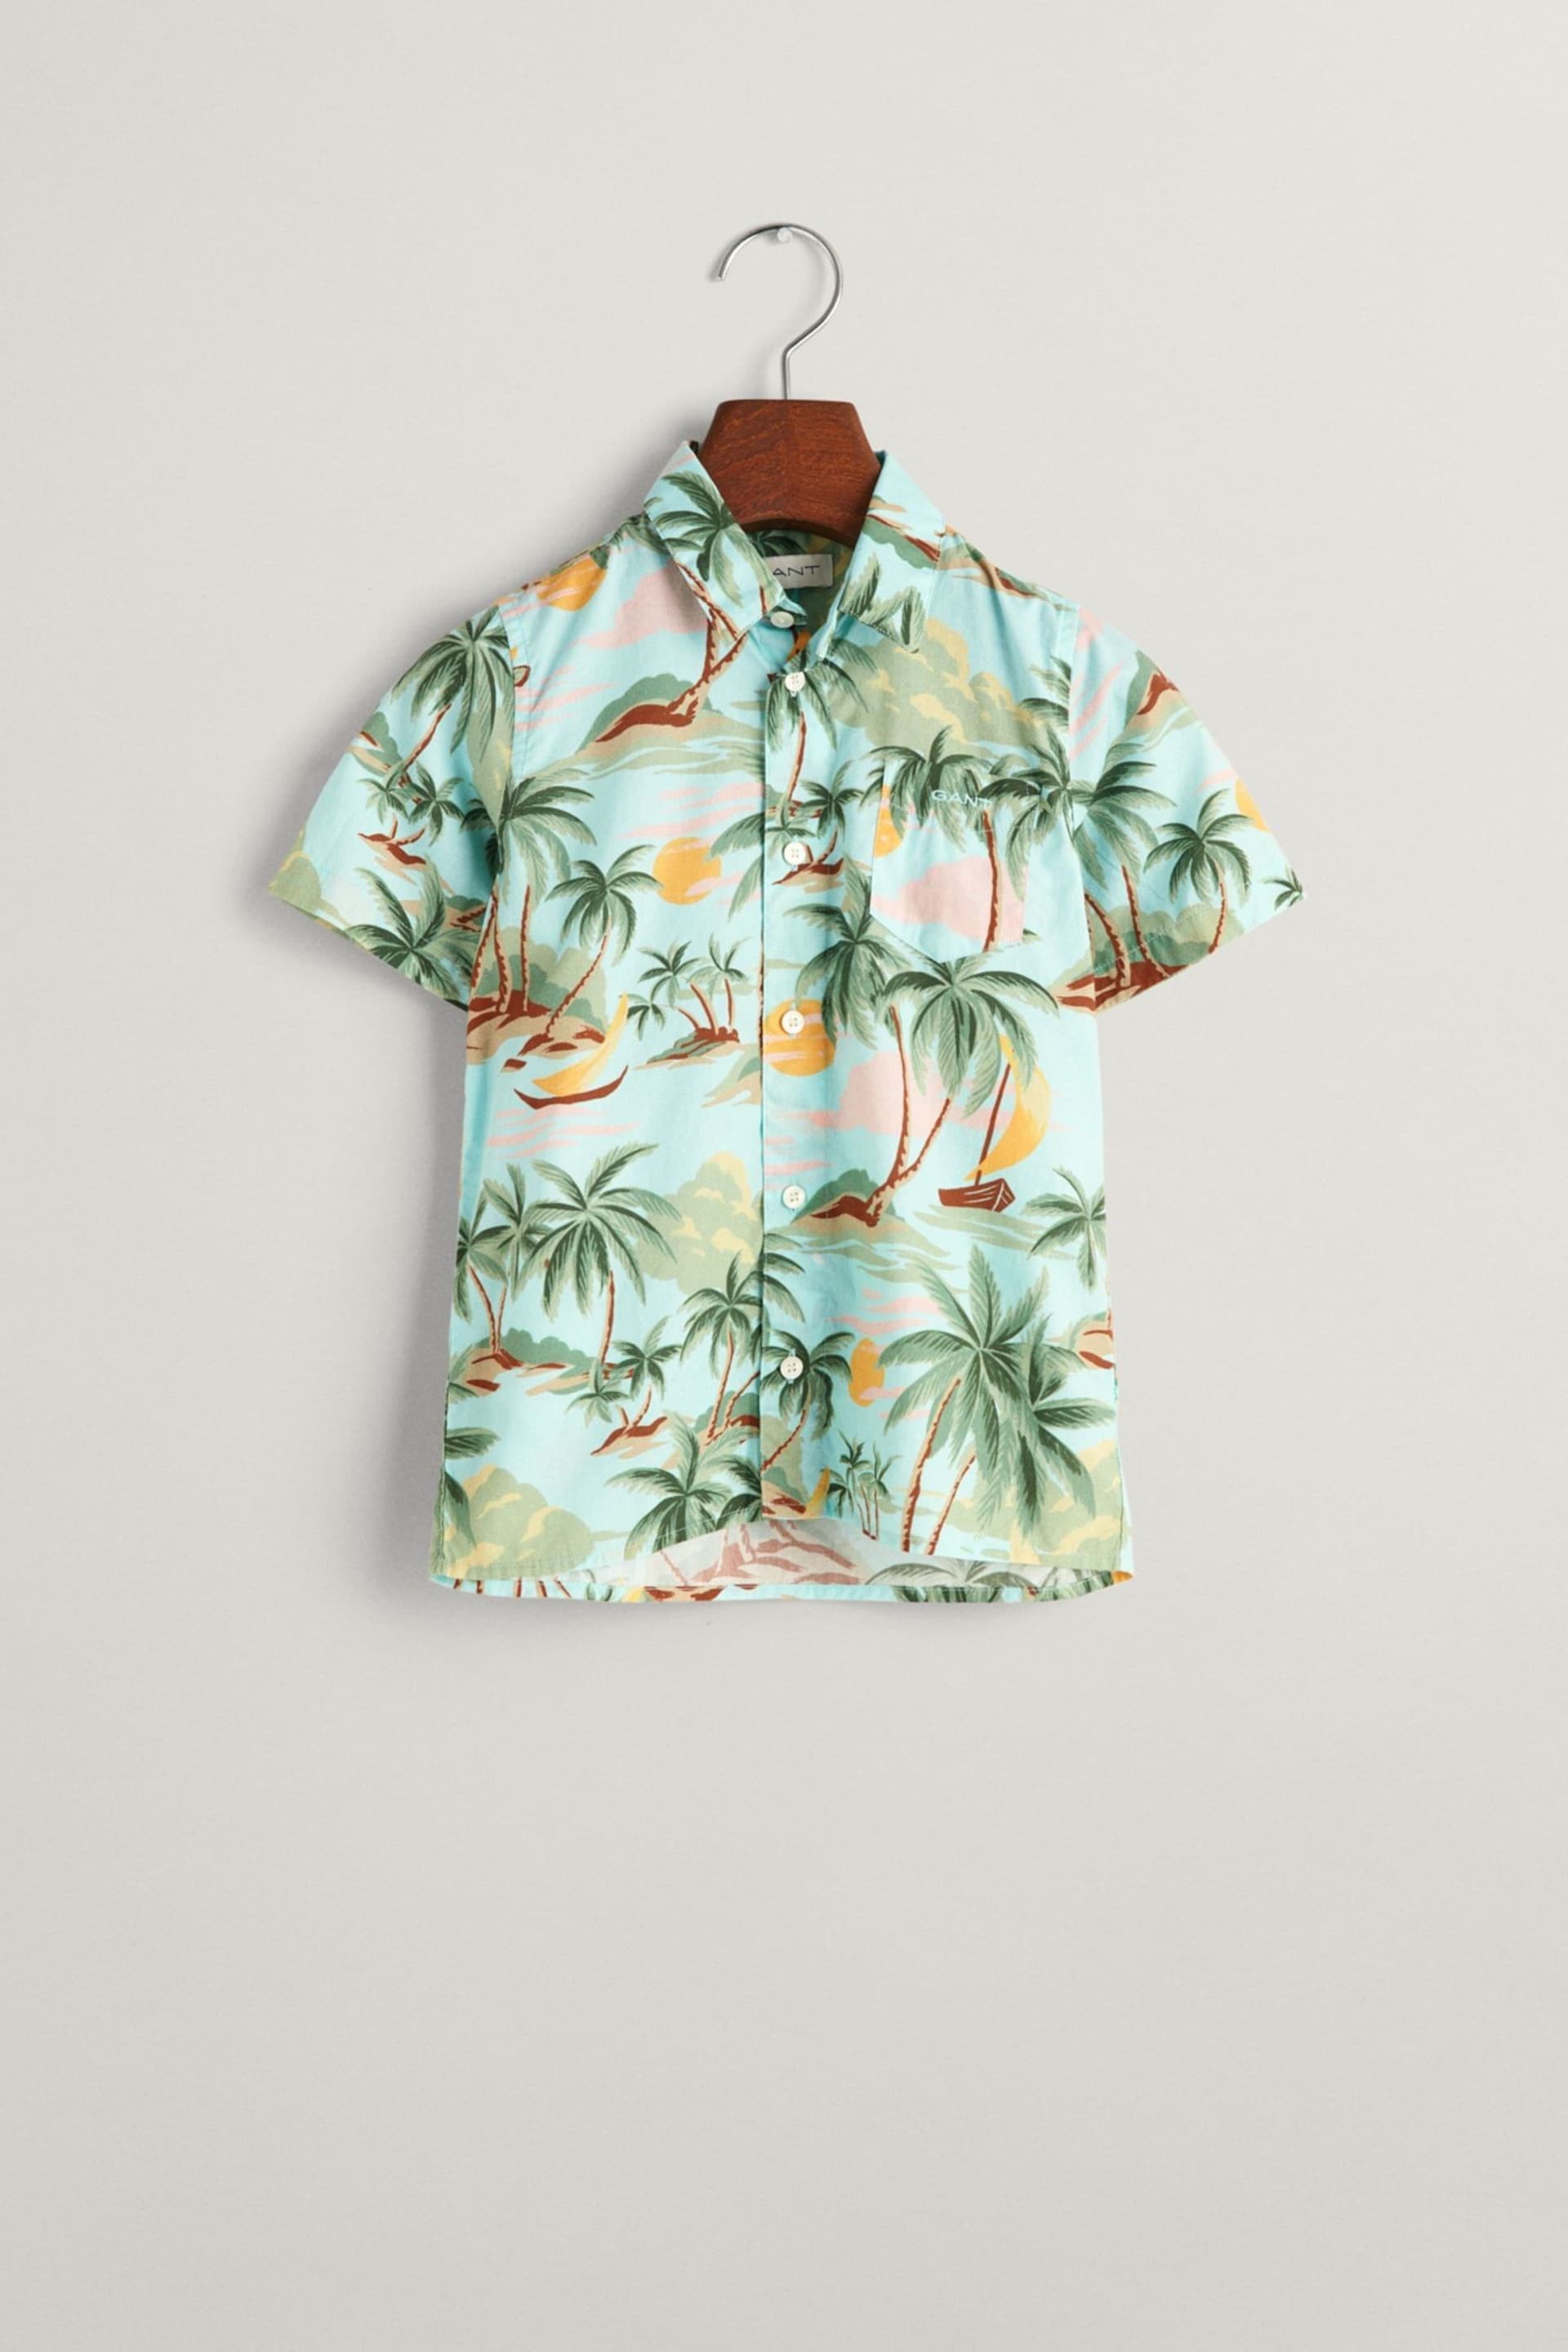 GANT Boys Green Palm Print Cotton Short Sleeve Shirt - Image 6 of 6